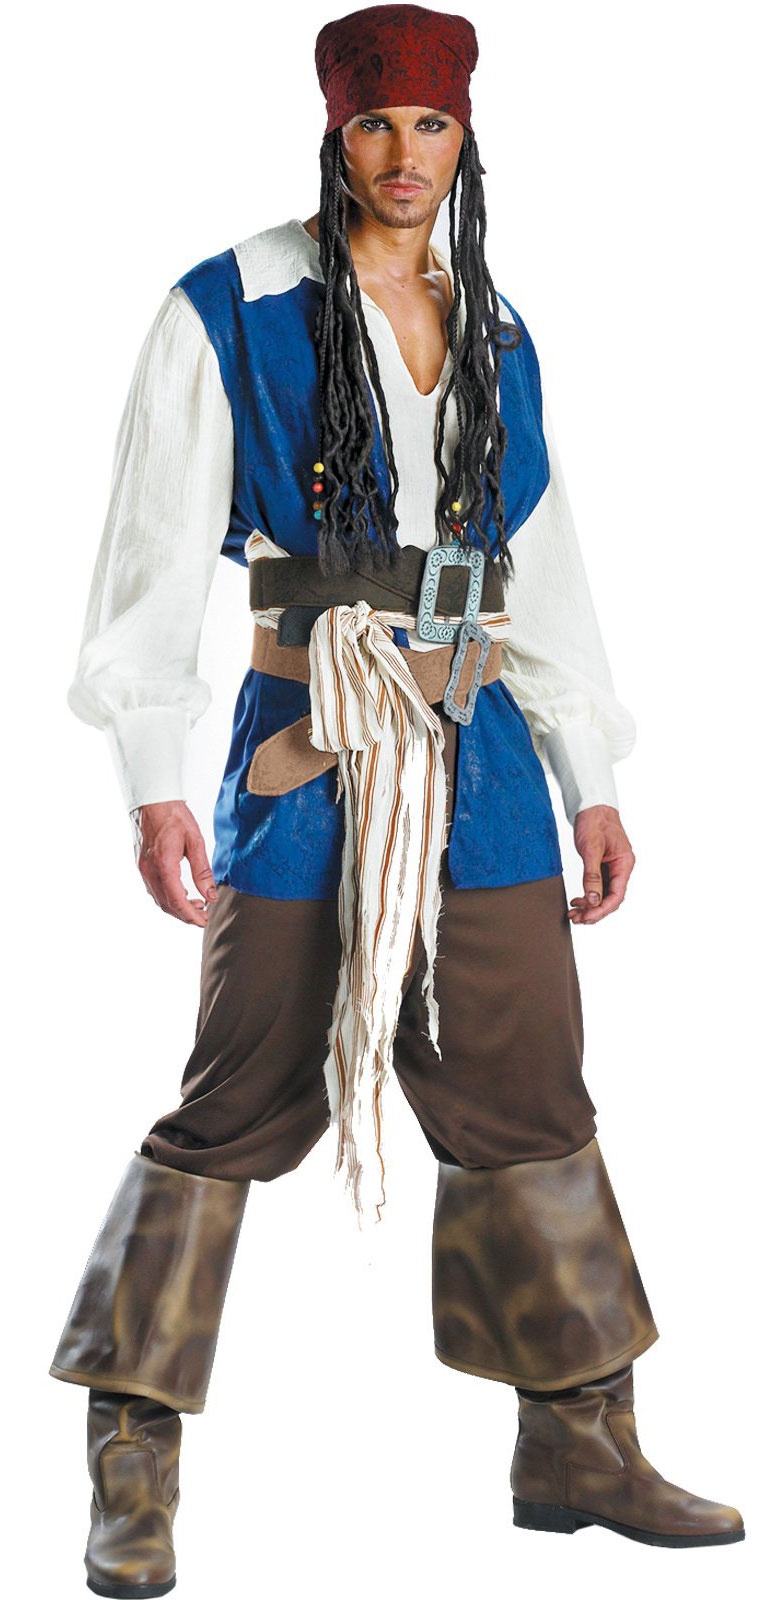 jack sparrow costume. Jack Sparrow Costumes